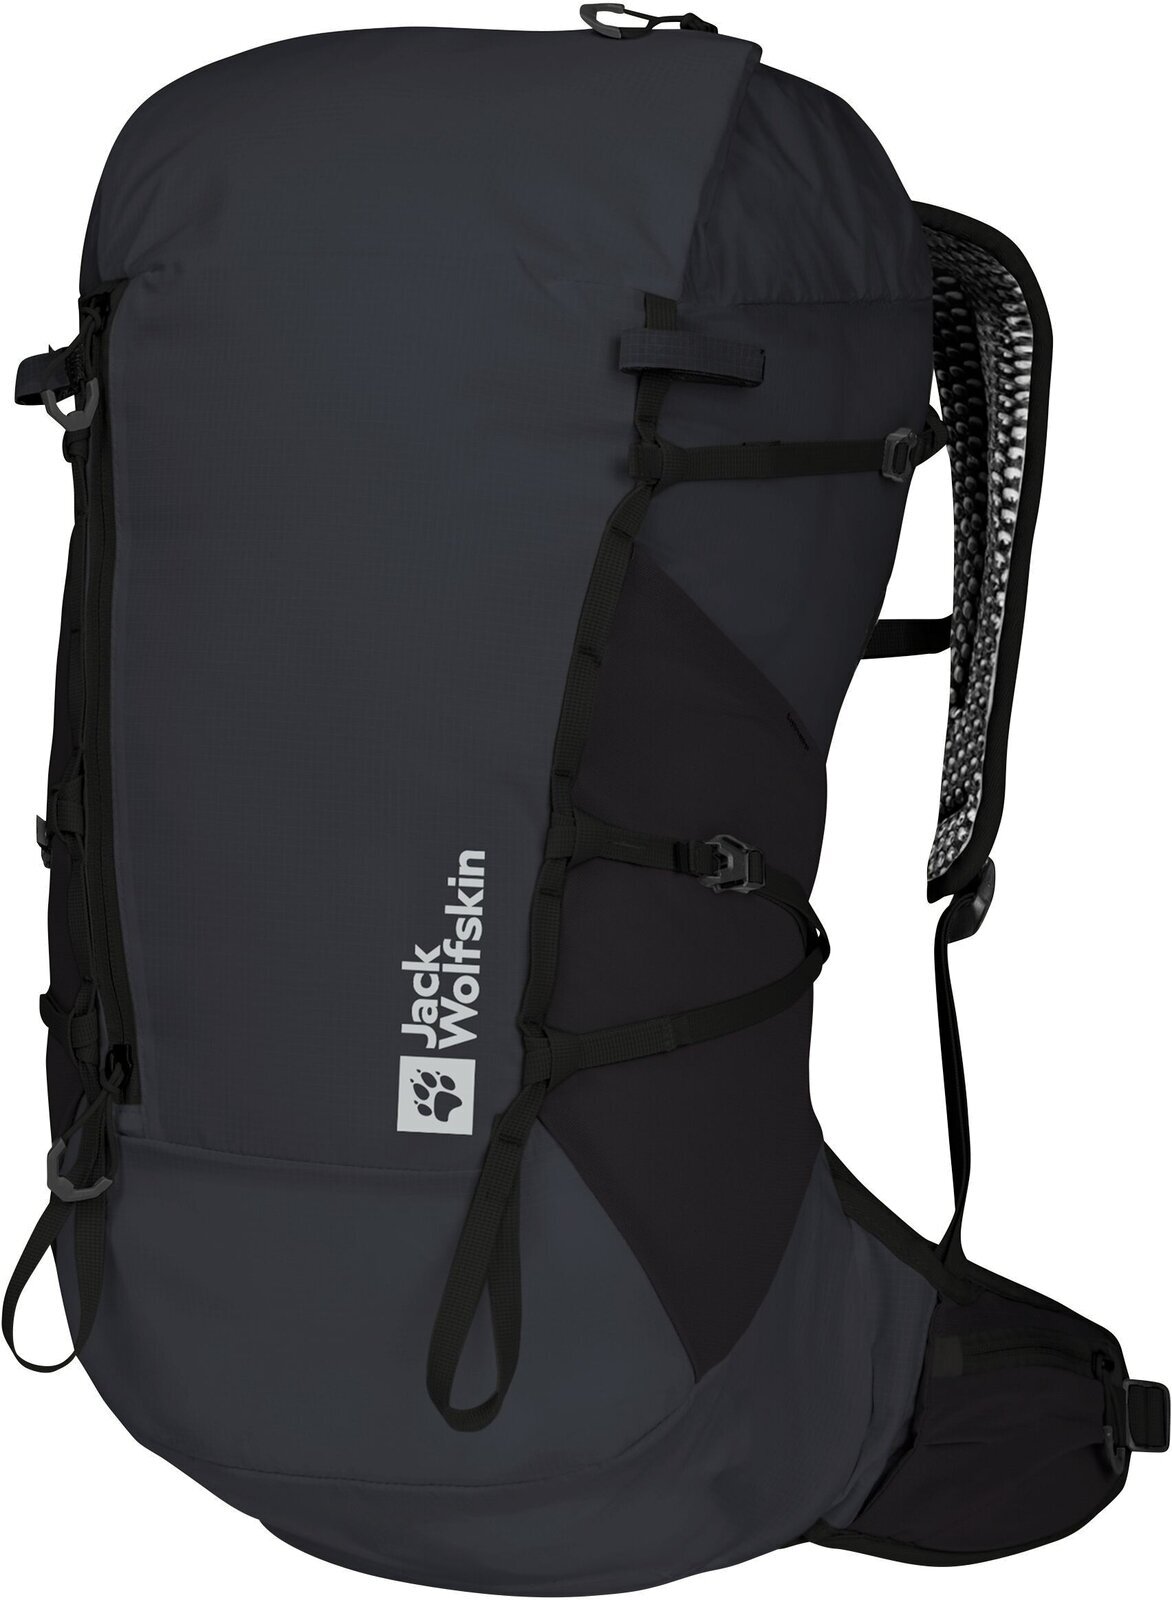 Outdoor Backpack Jack Wolfskin Prelight Vent 20 Phantom S Outdoor Backpack